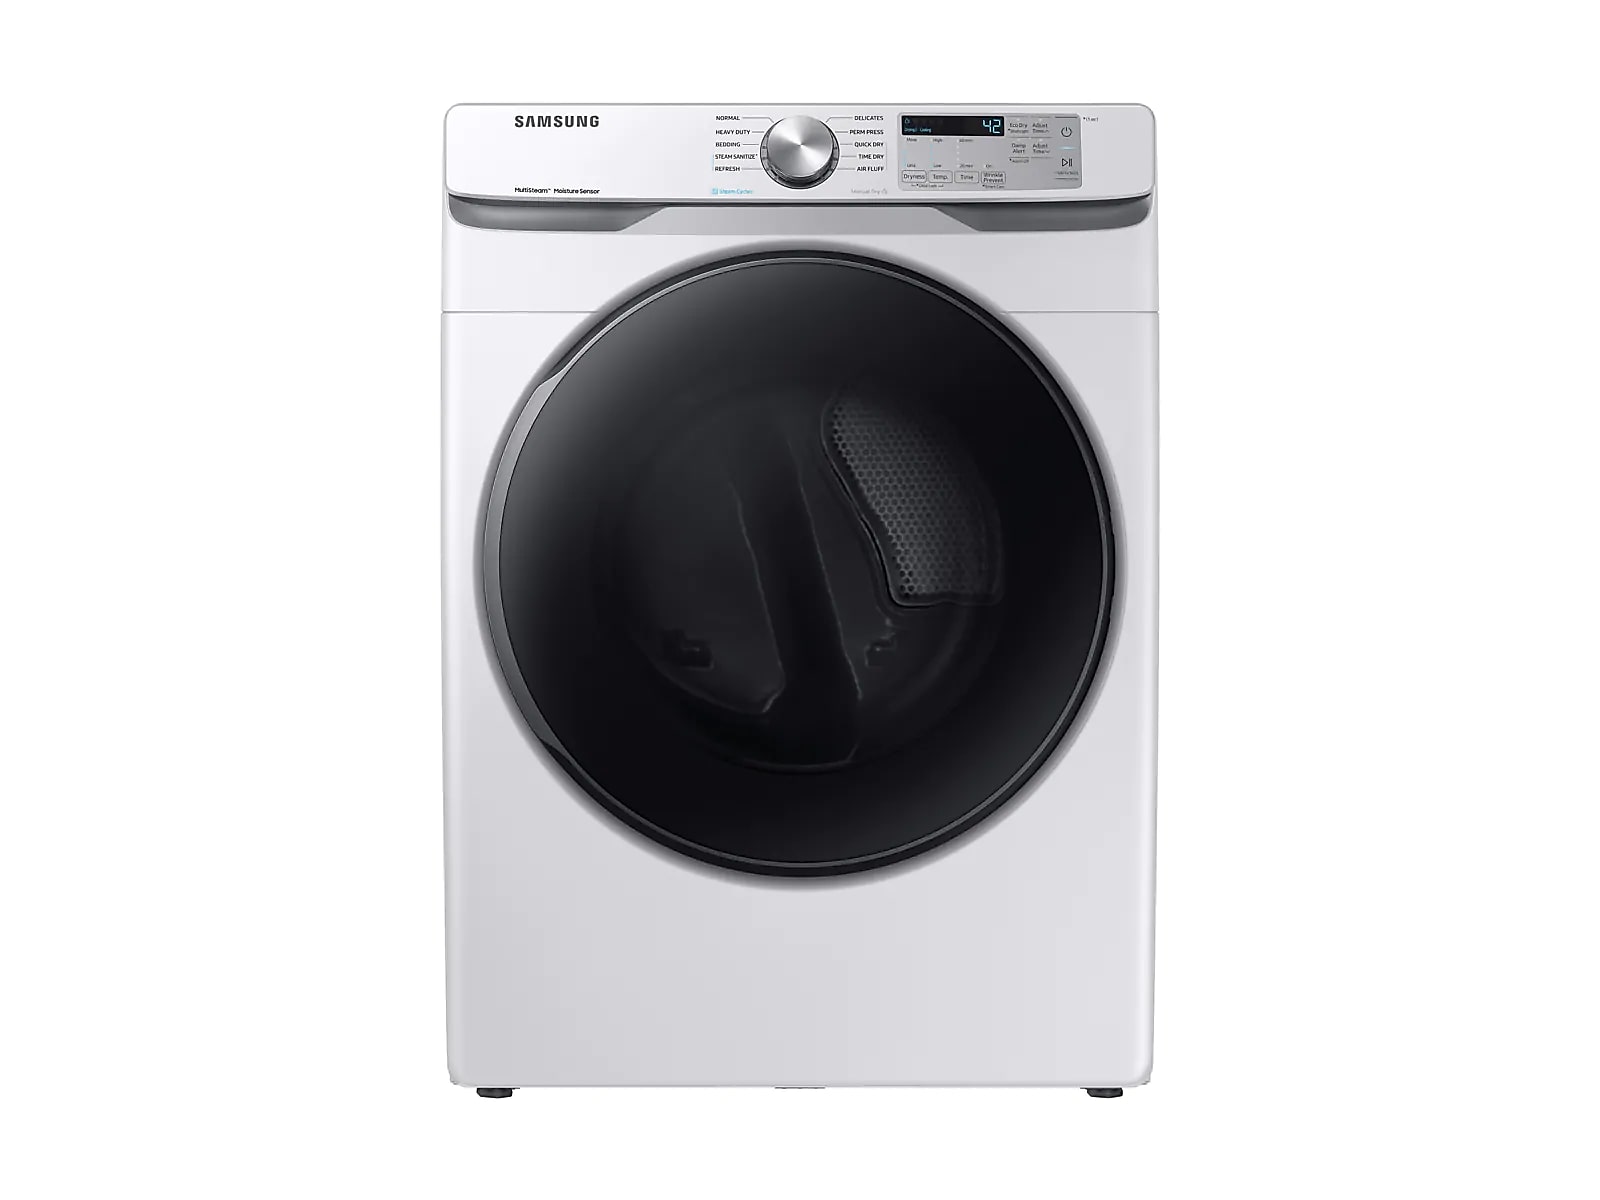 Samsung 7.5 cu. ft. Gas Dryer with Steam Sanitize+ in White(DVG45R6100W/A3)